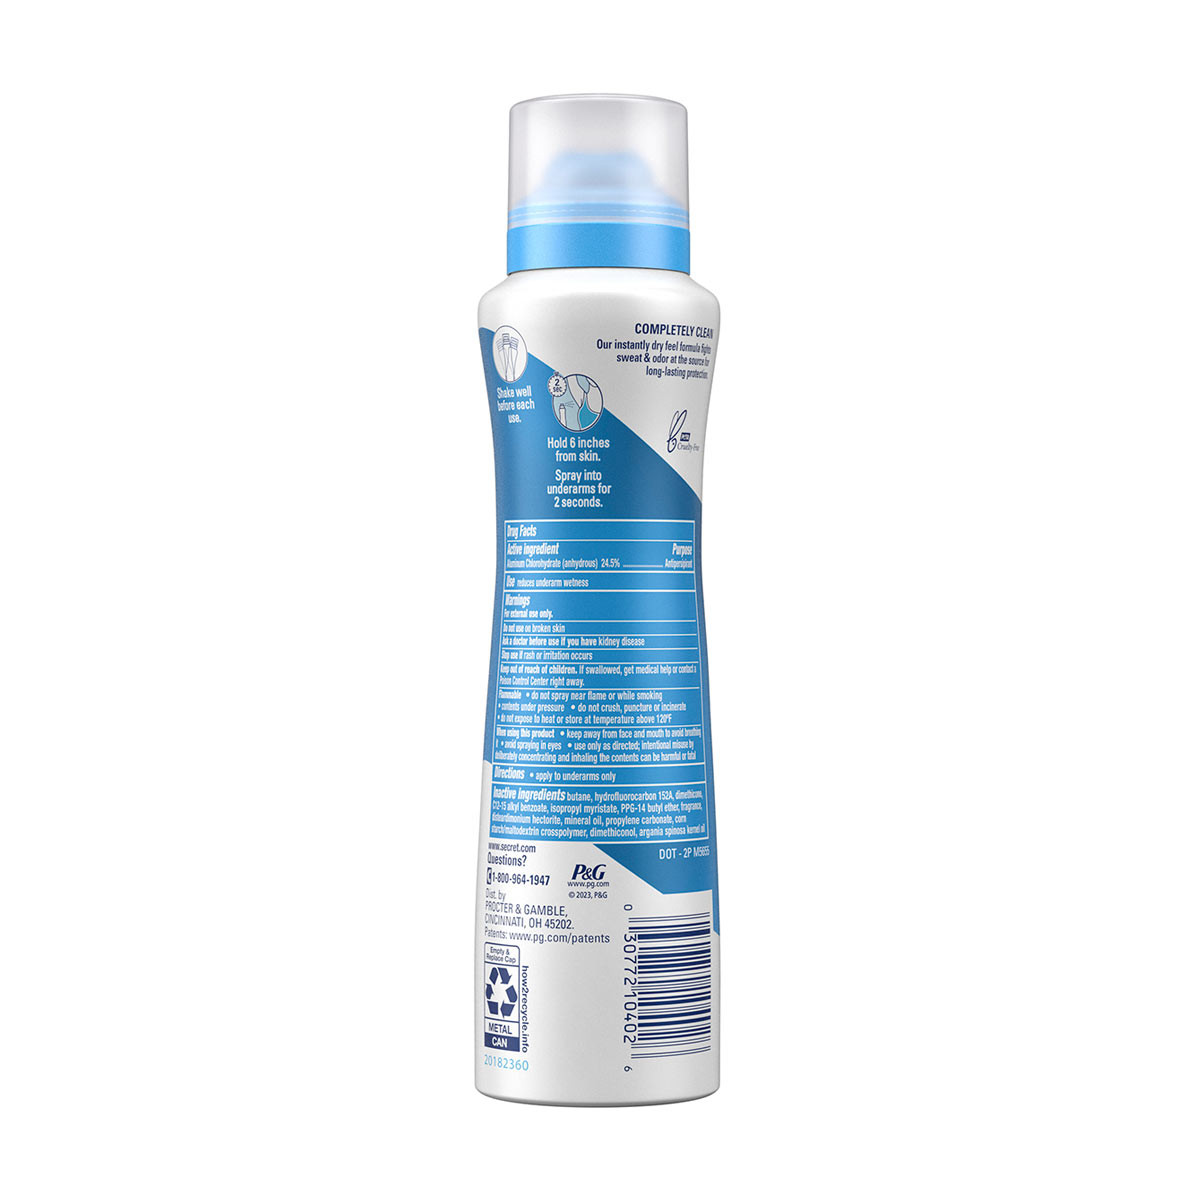 Secret Outlast Dry Spray Antiperspirant & Deodorant, Clean, 4.1 oz